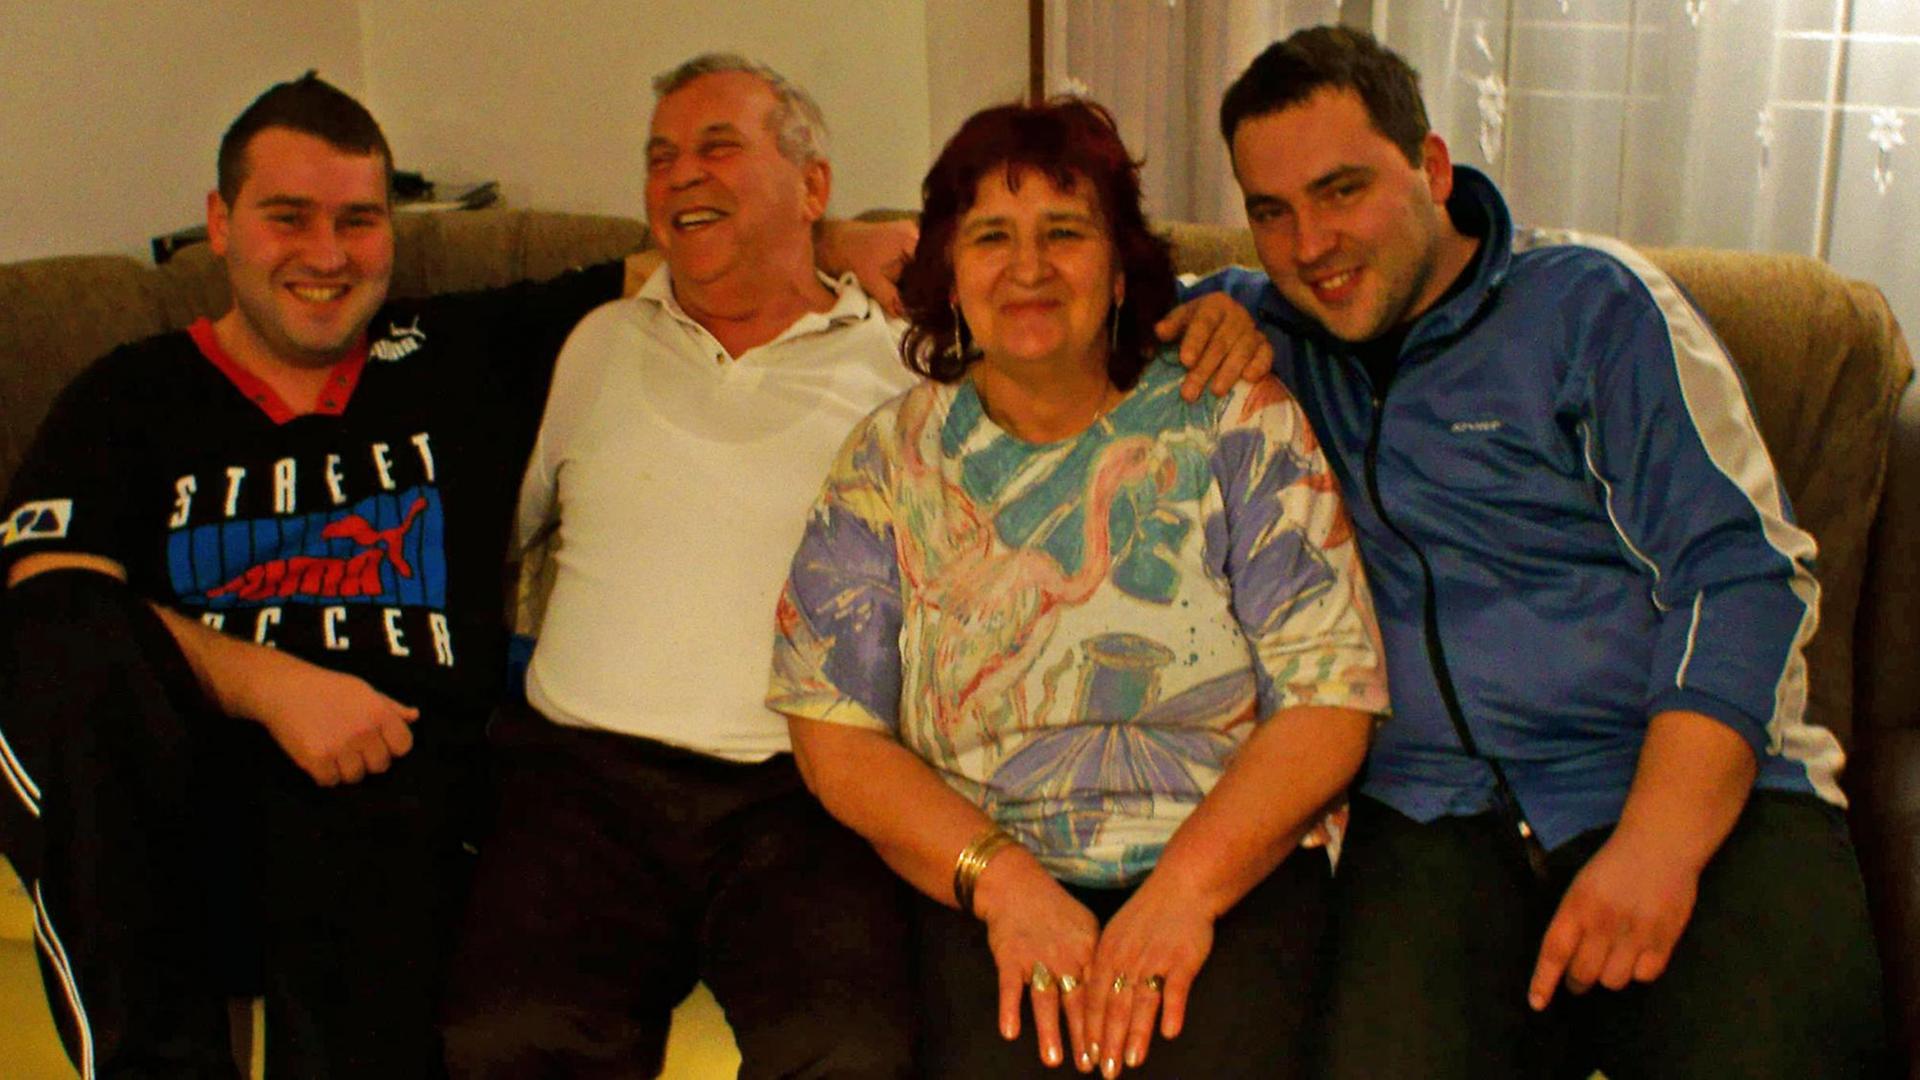 Eldar, Senad, Tereza und Benjamin Haurdič auf dem Sofa